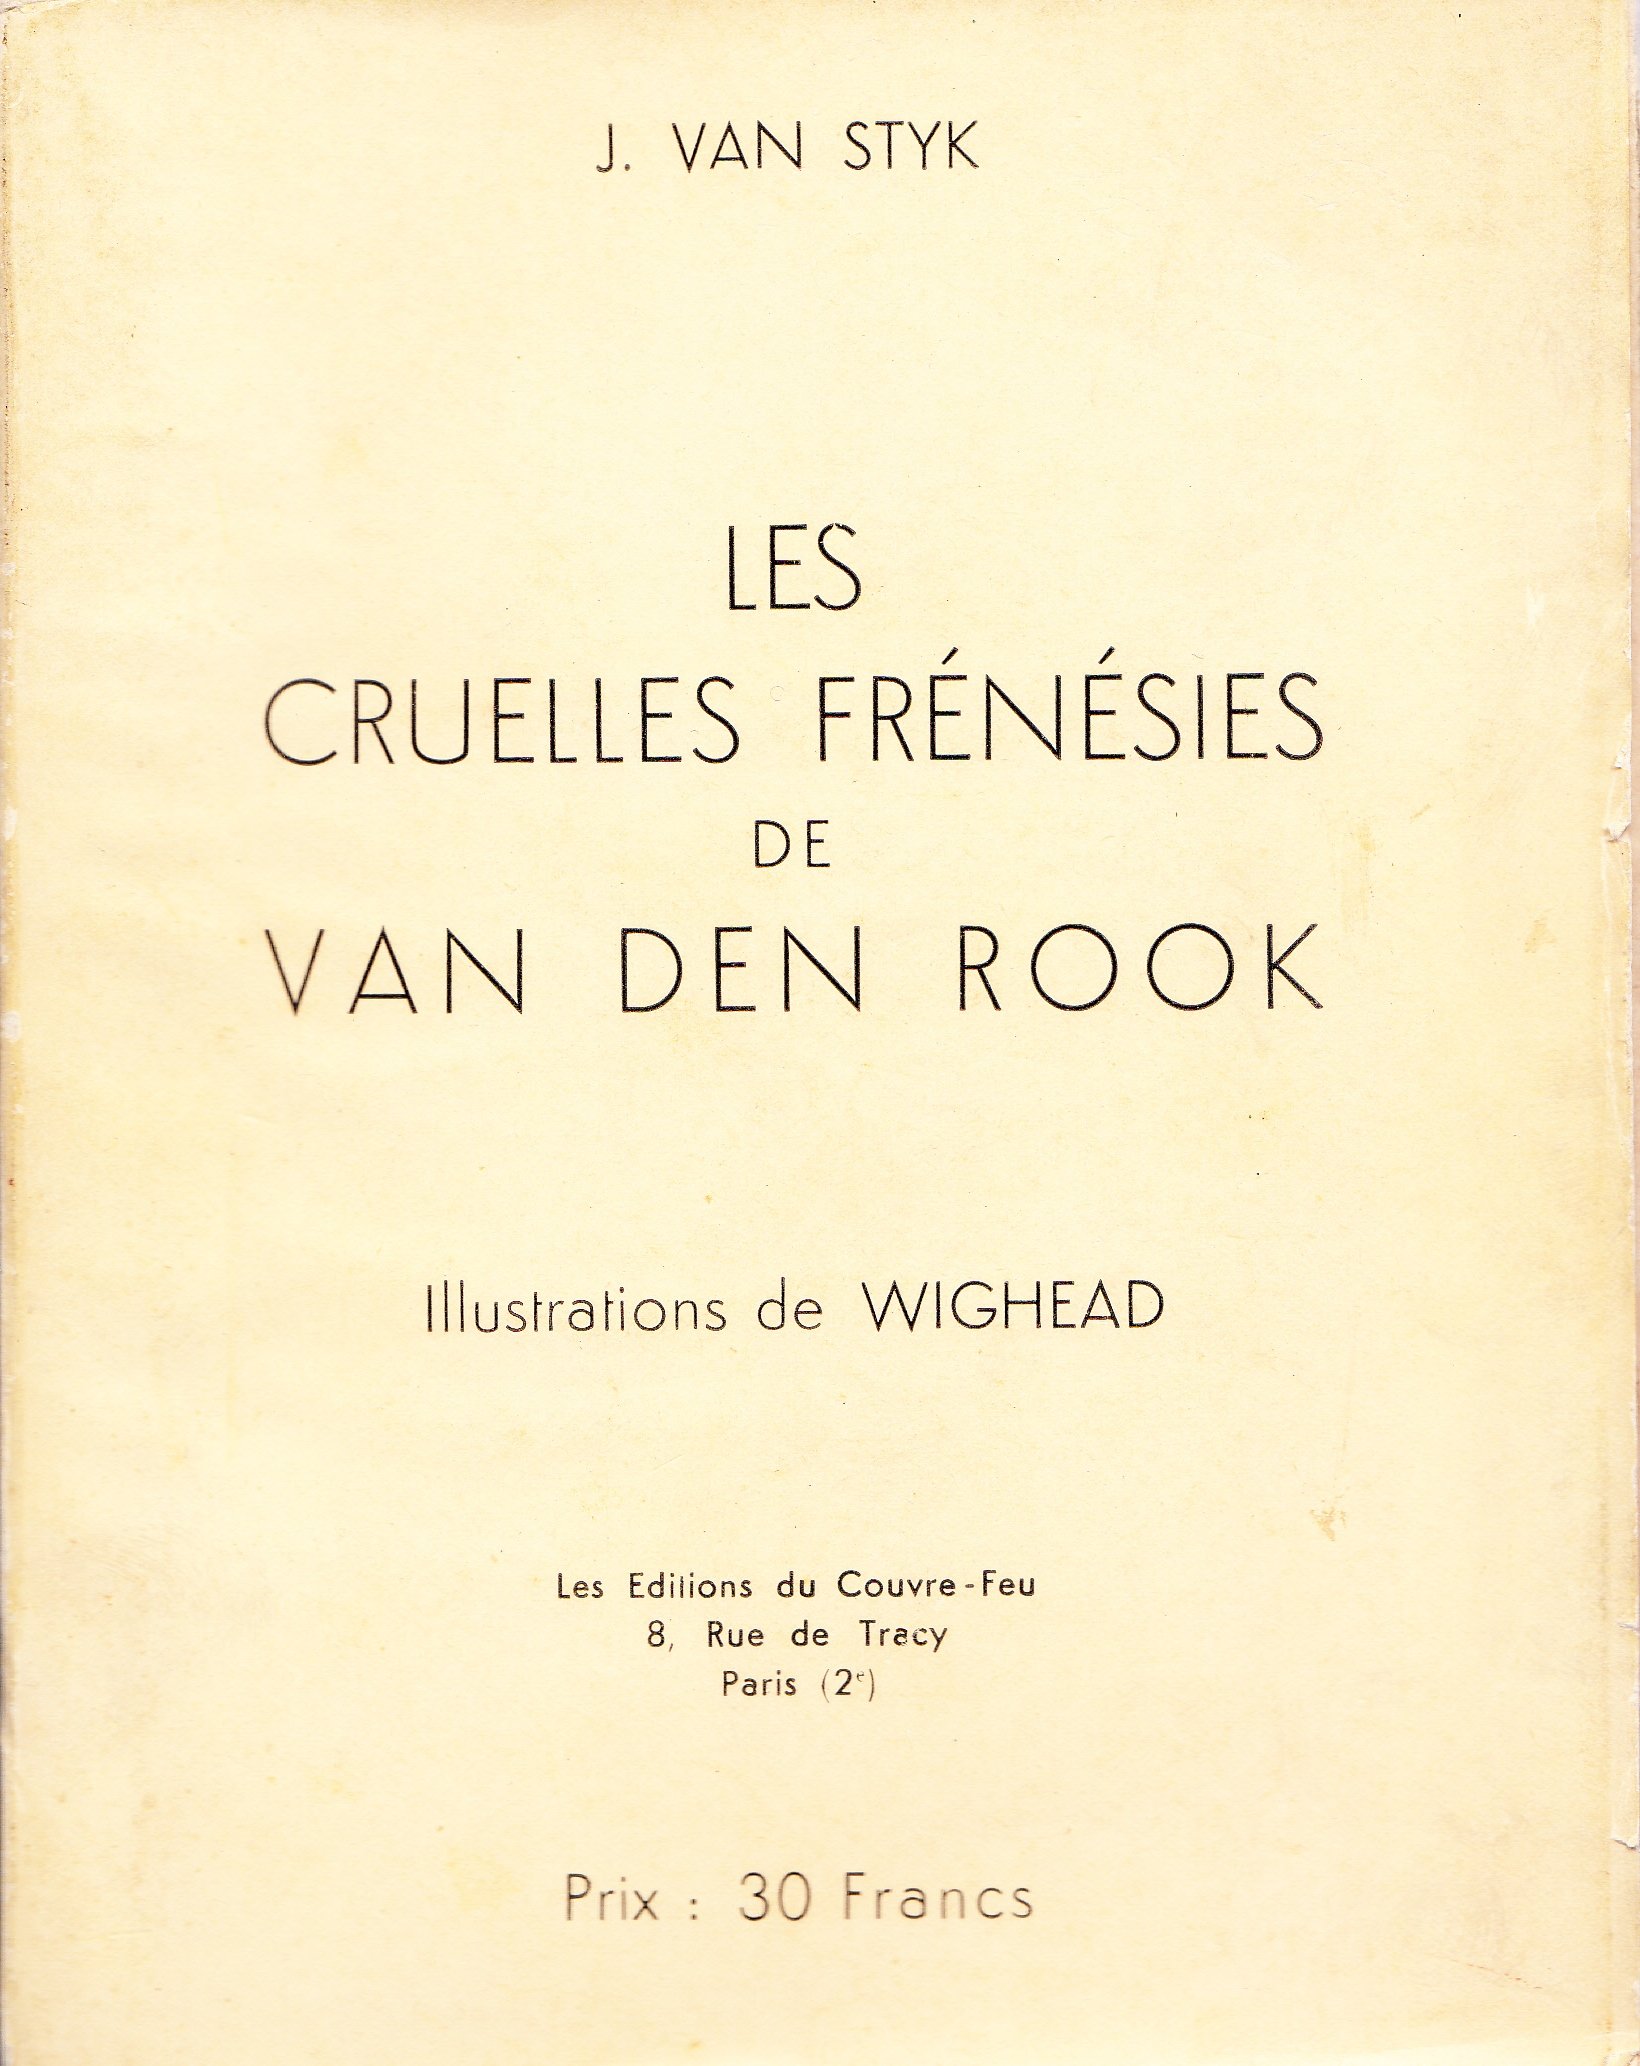 Wighead, 'Cruelles Frénésies de Van den Rook' Spanking Illustrations_1.jpg